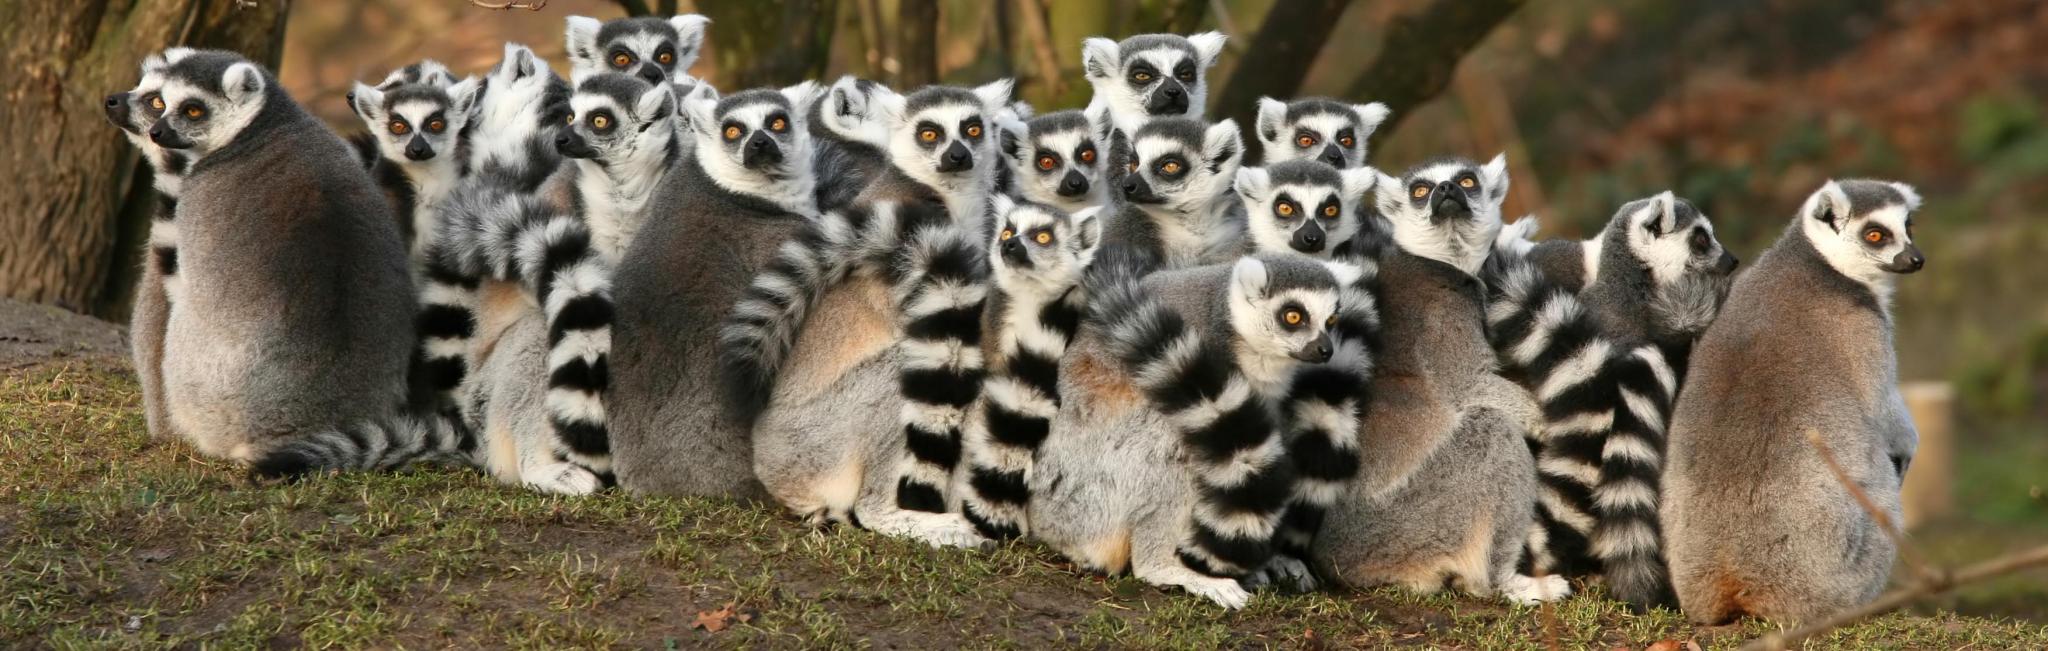 Africa-madagascar-group-of-lemurs